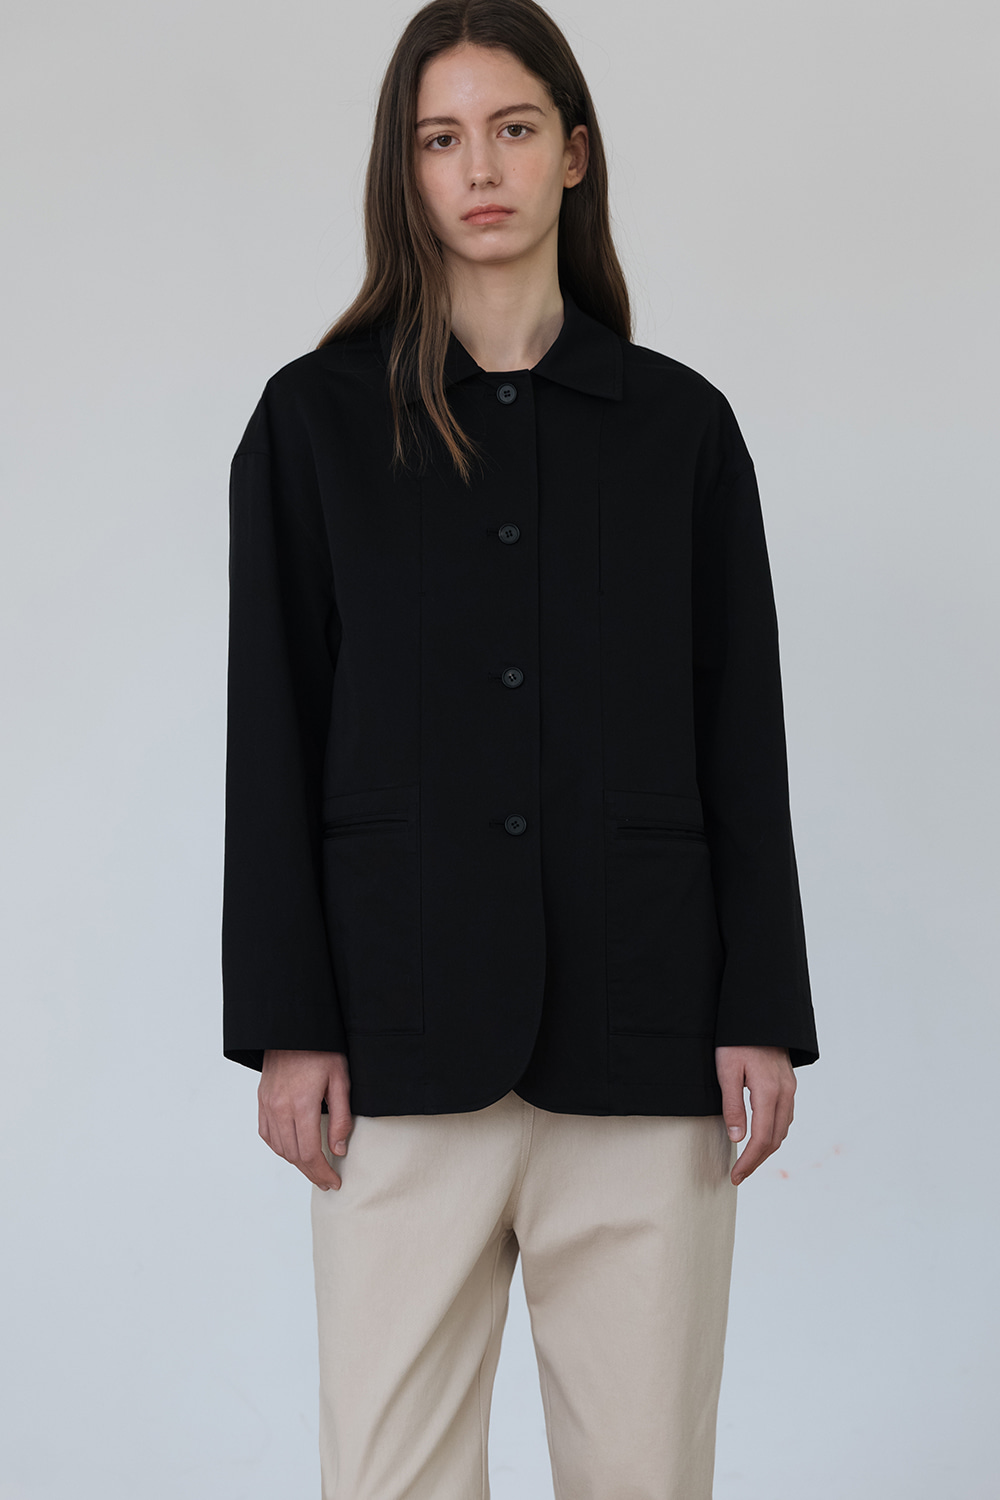 [Black] Convertible Single Jacket